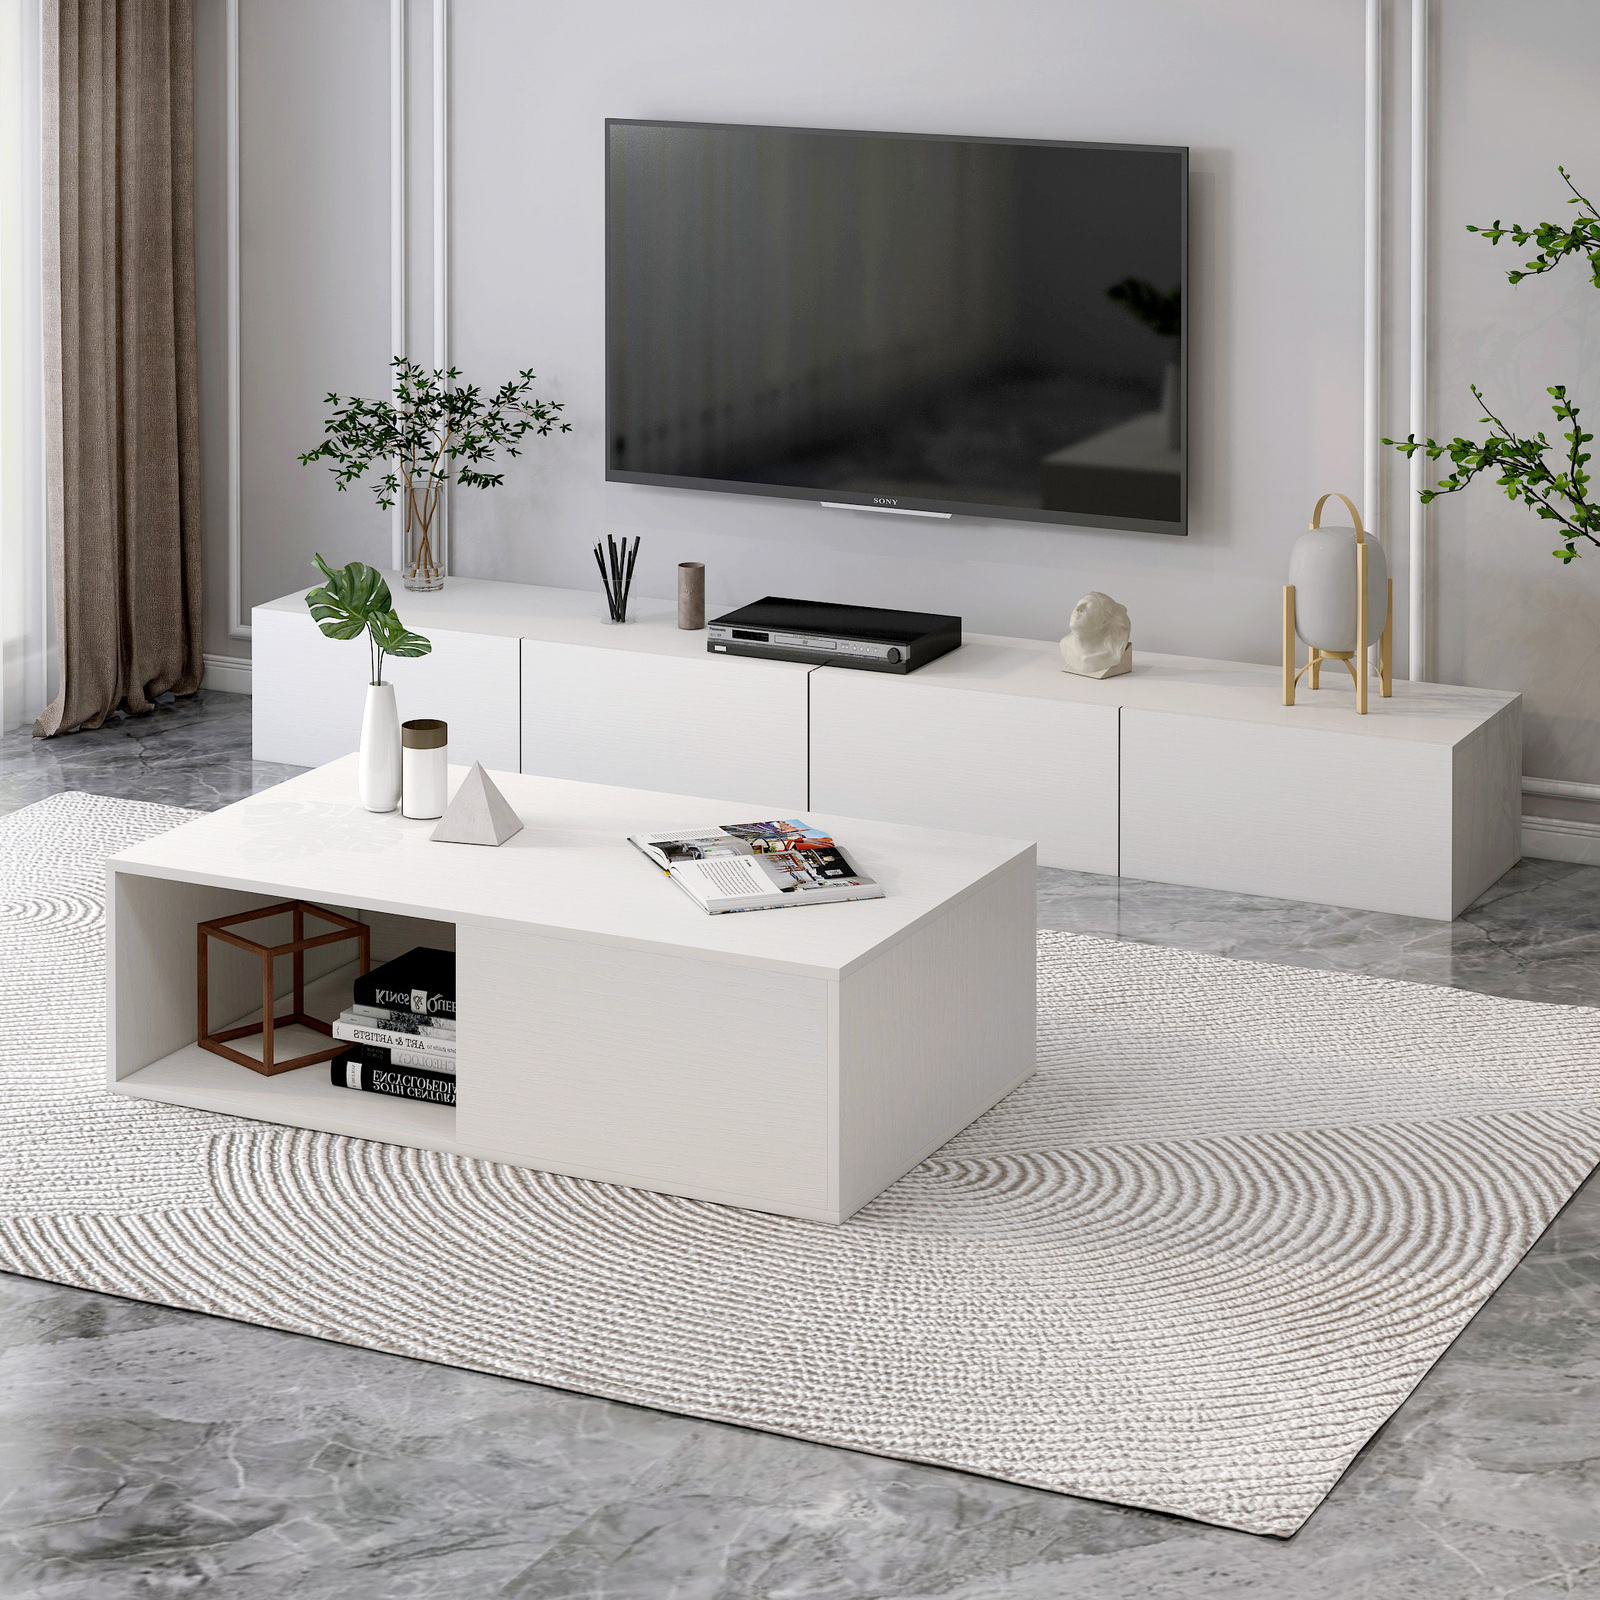 CFDZ CF Furniture Living Room 2 Piece Set Lamp Table TV Stand Modern Simple Practical White+Oak 